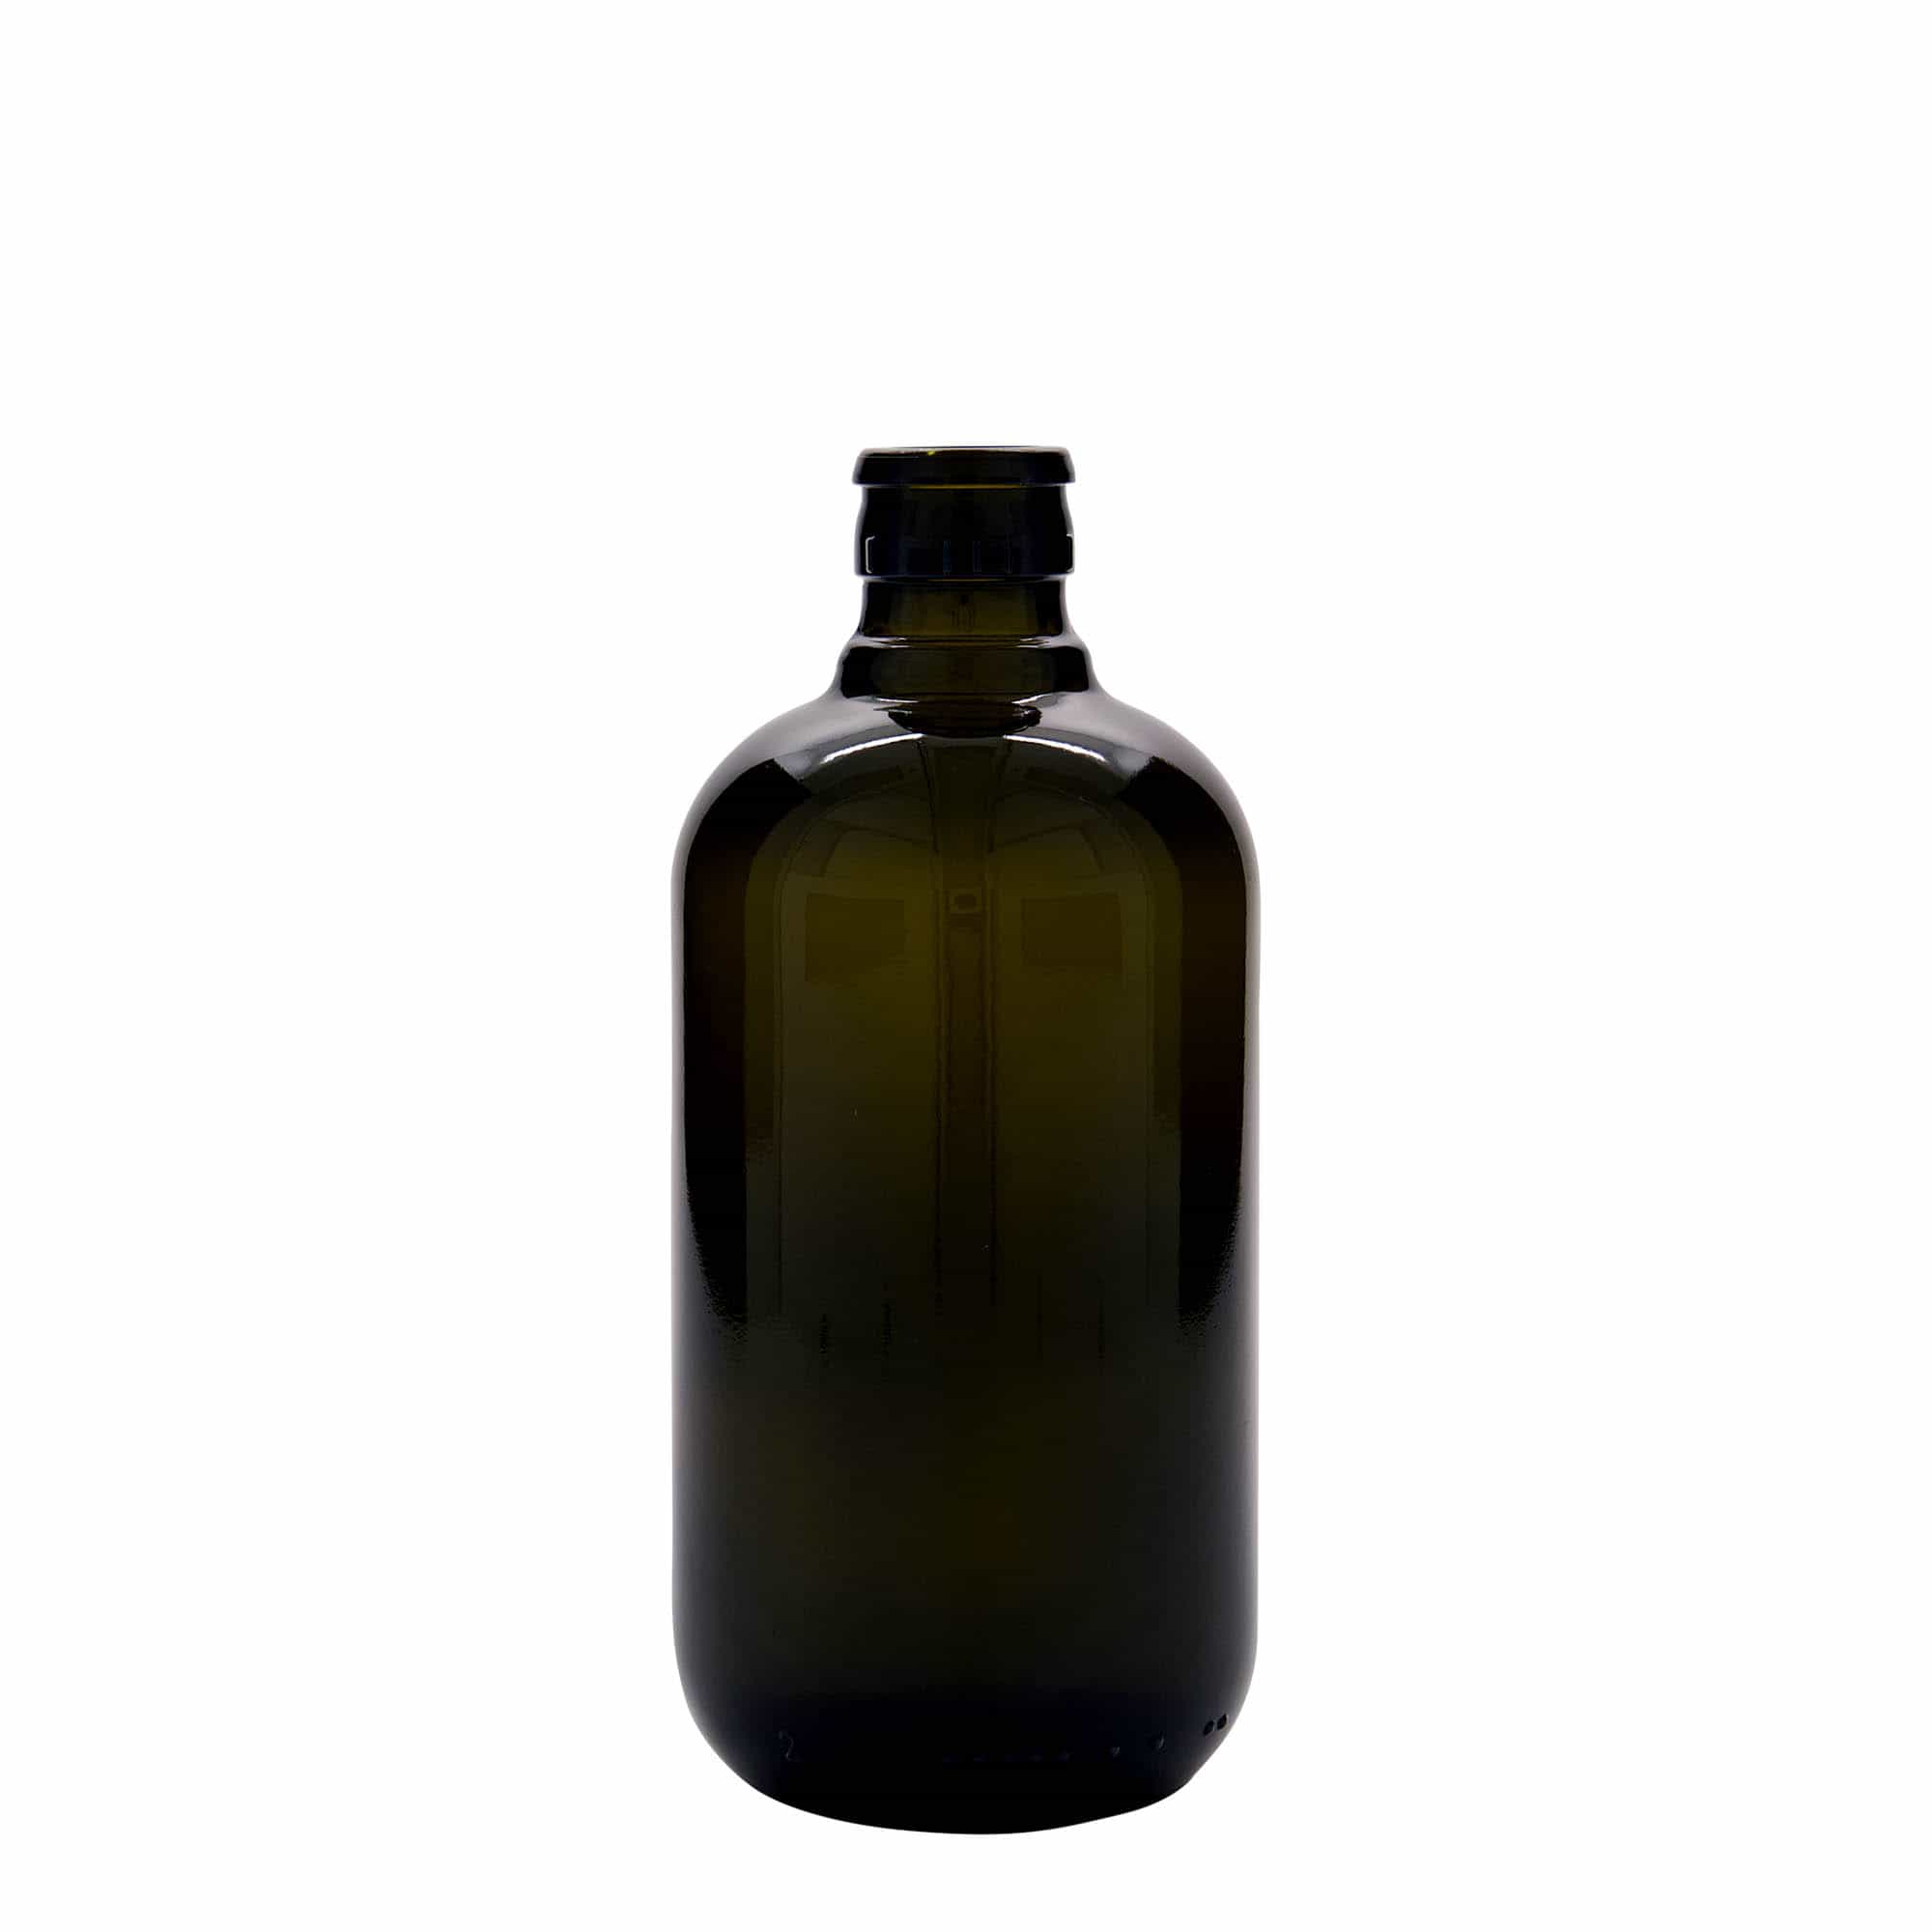 500 ml etikka-/öljypullo 'Biolio', lasi antiikinvihreä, suu: DOP